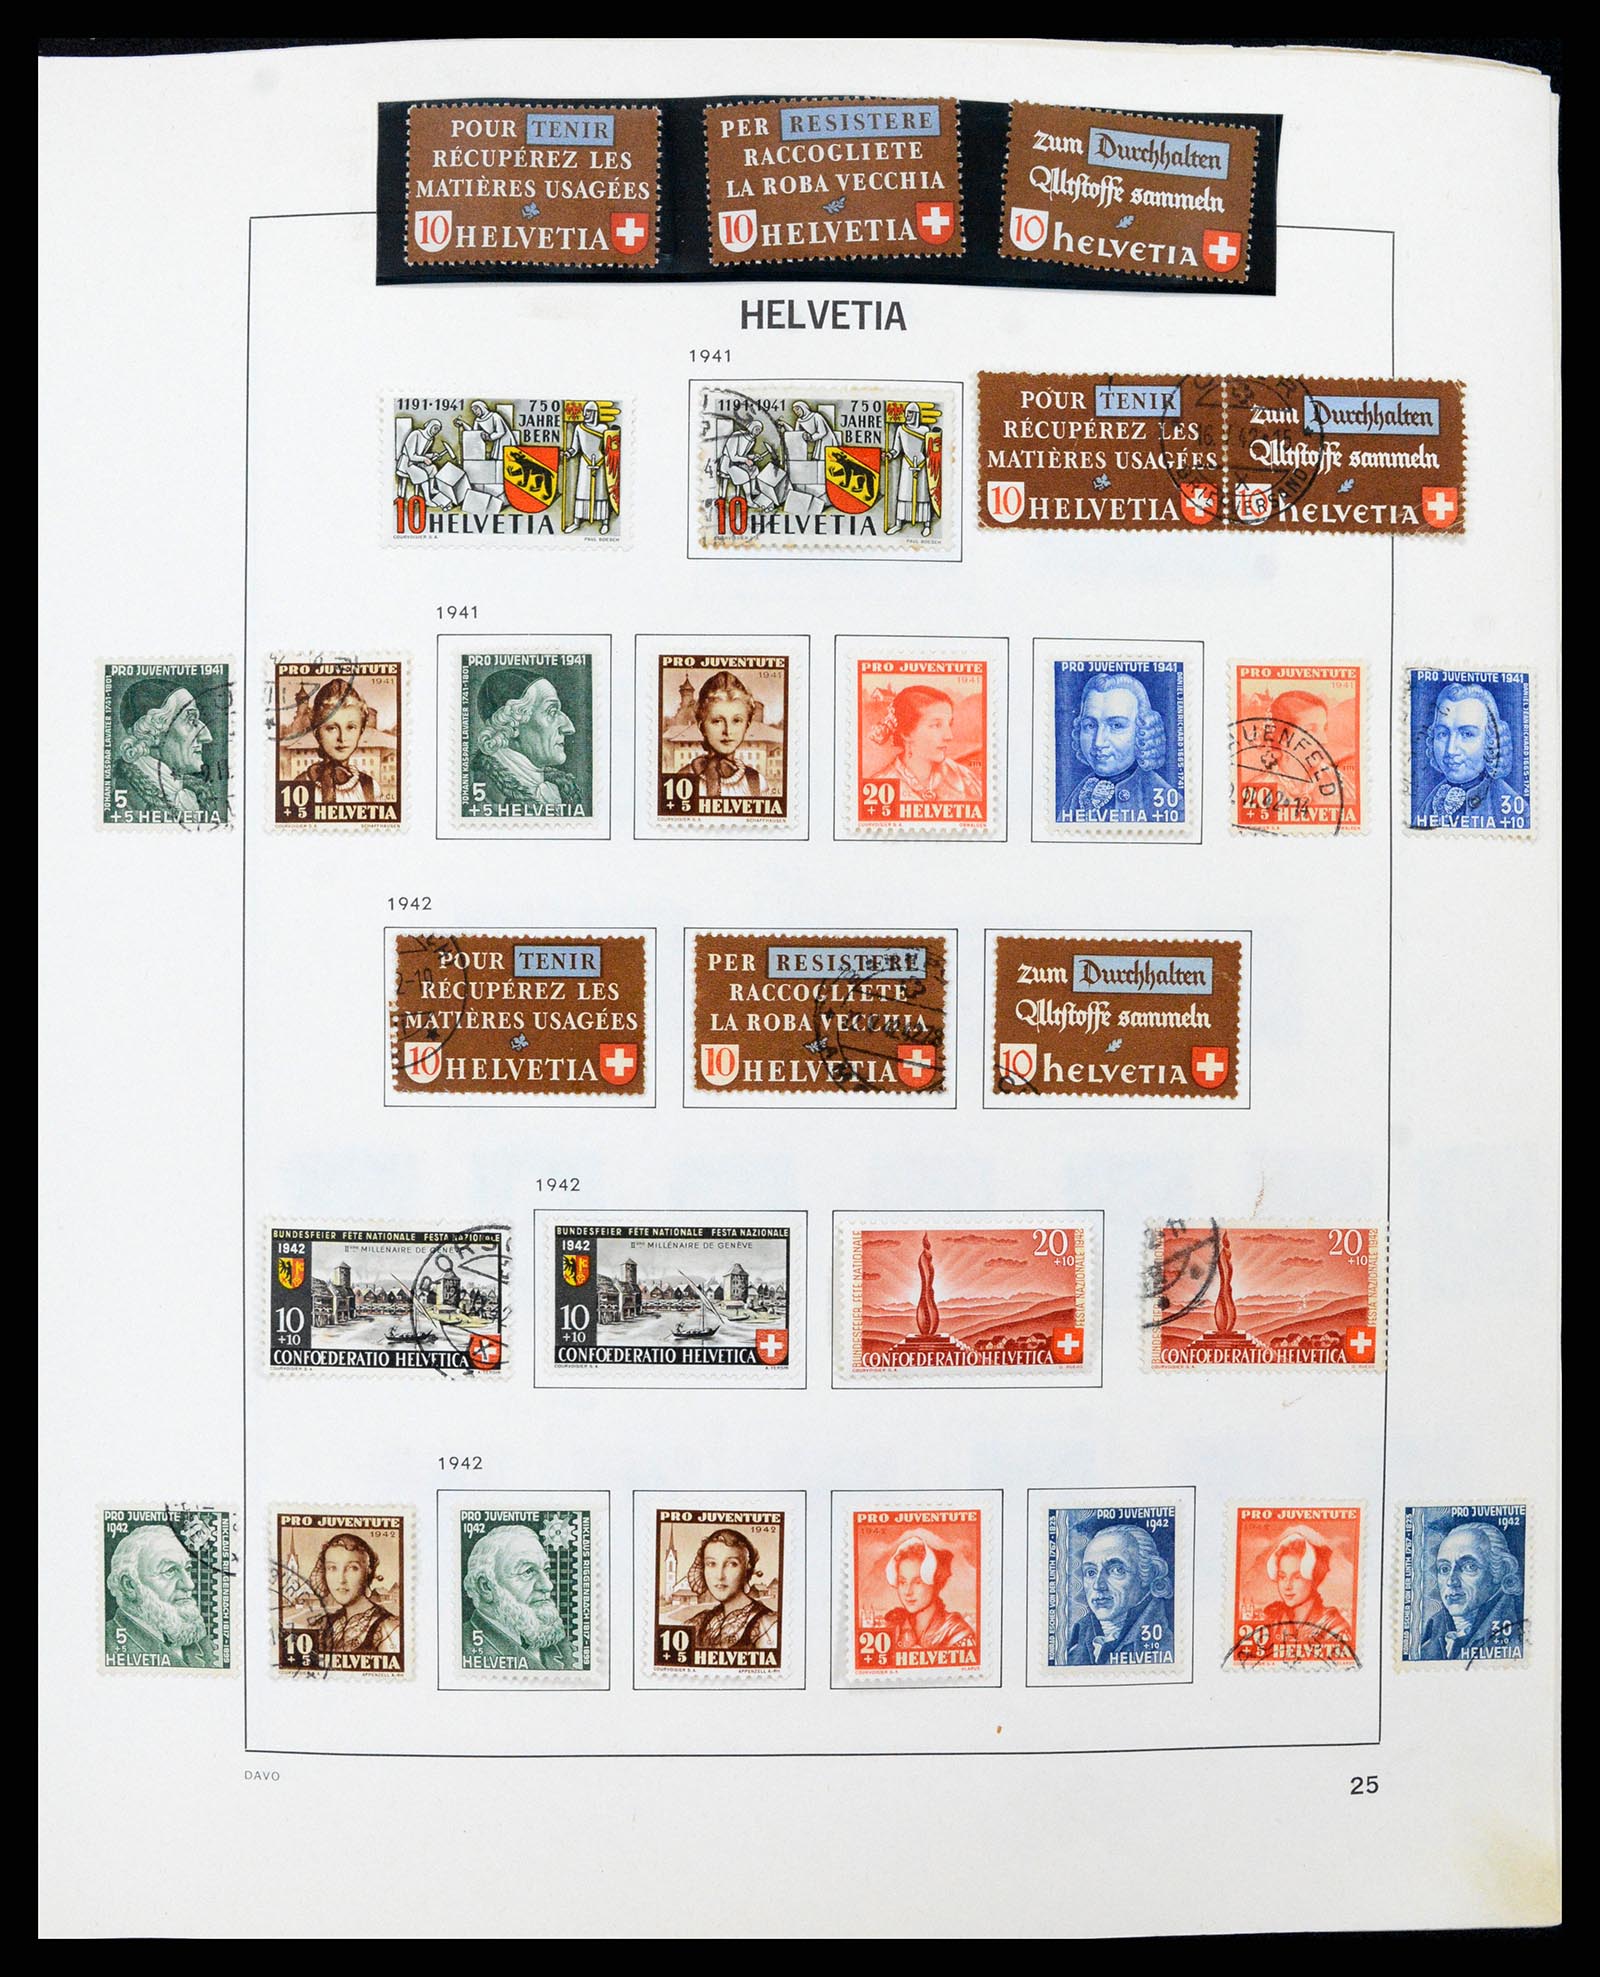 37496 024 - Stamp collection 37496 Switzerland 1854-2002.